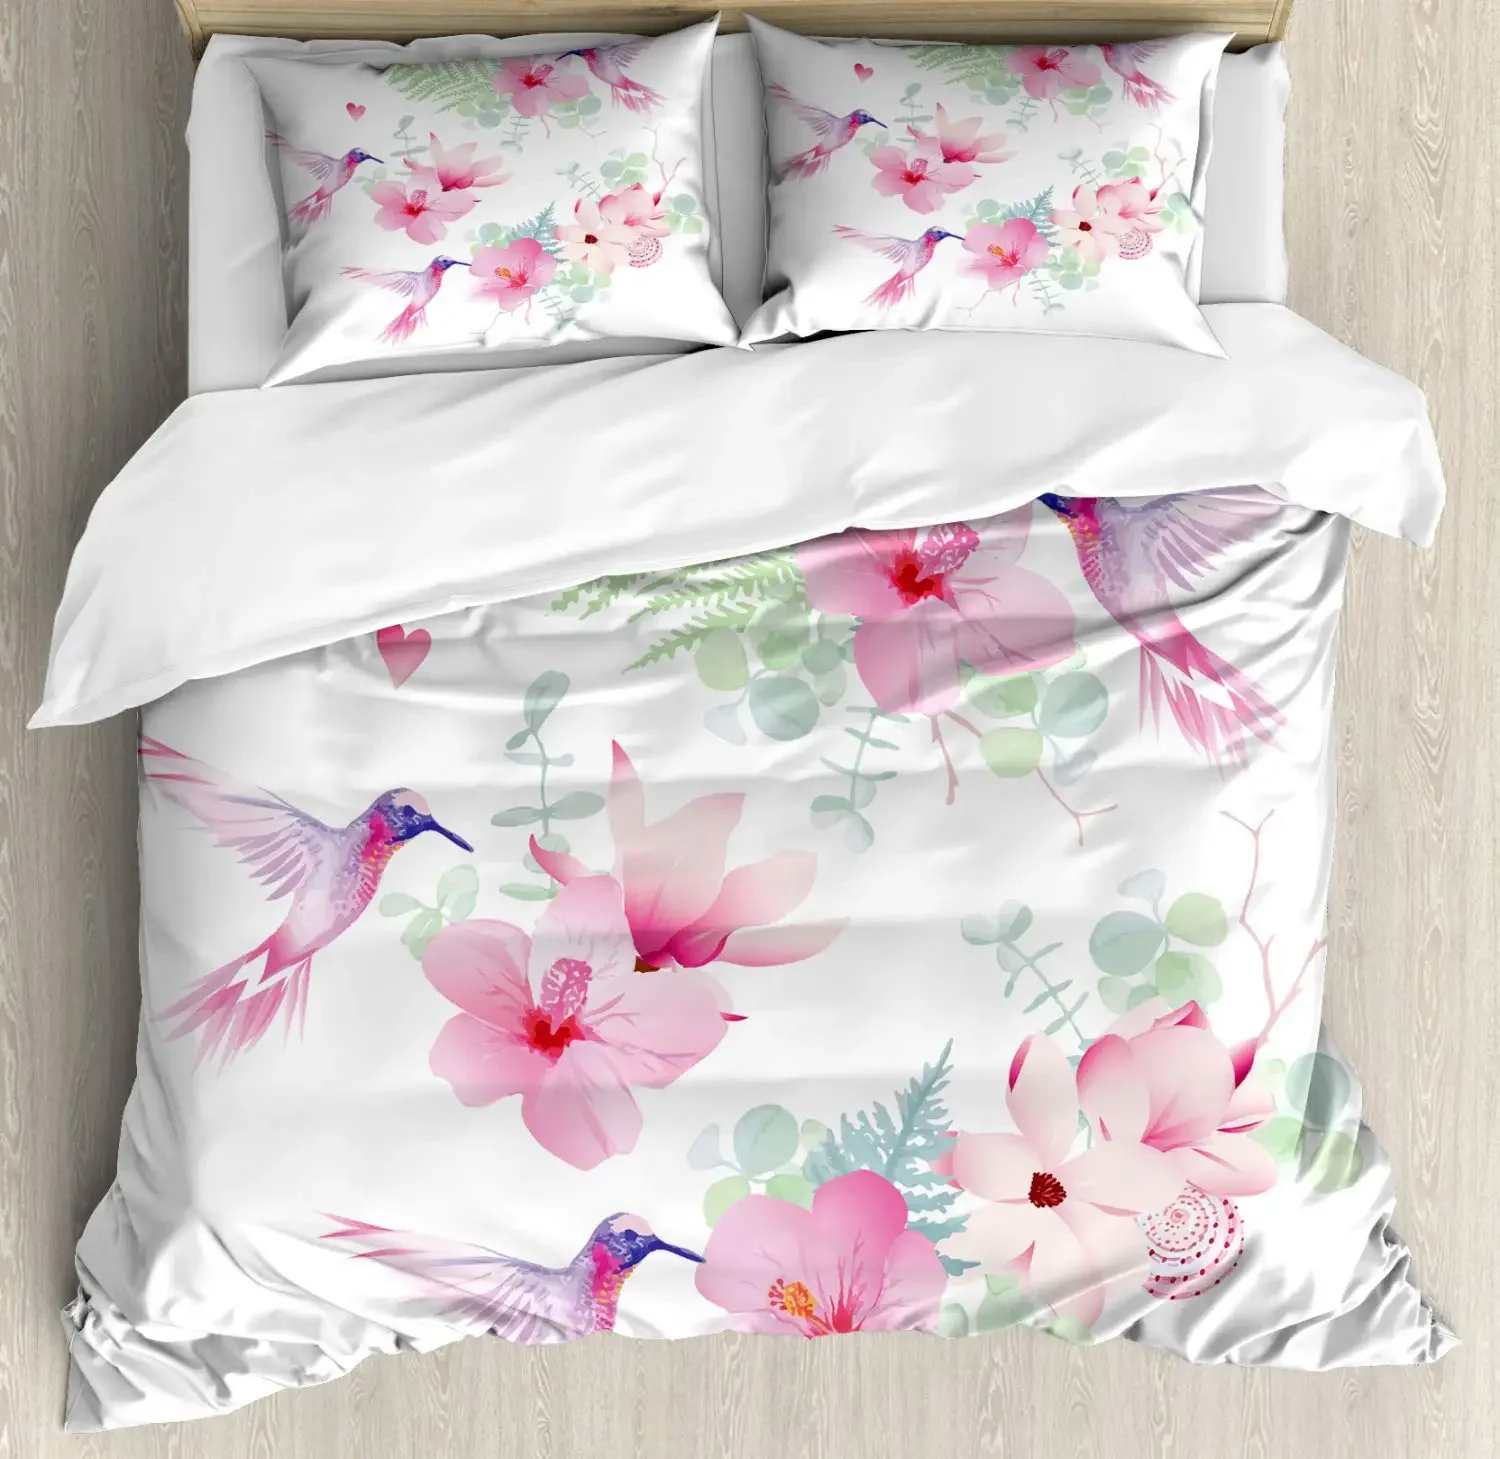 

Watercolor Hummingbird Duvet Cover Set, Decorative 3 Piece Bedding Set with 2 Pillow Shams, Full King Queen Size, Bedroom Decor